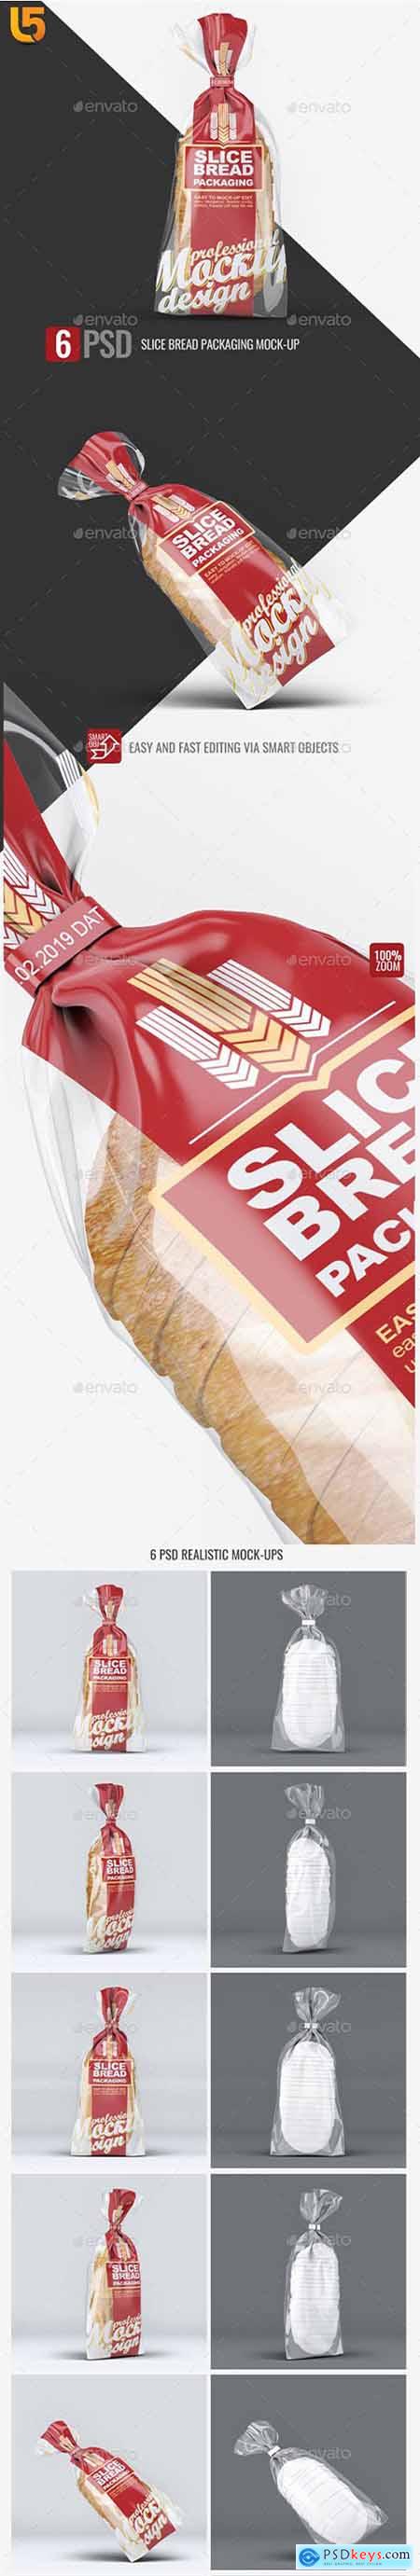 Graphicriver Slice Bread Packaging Mock-Up